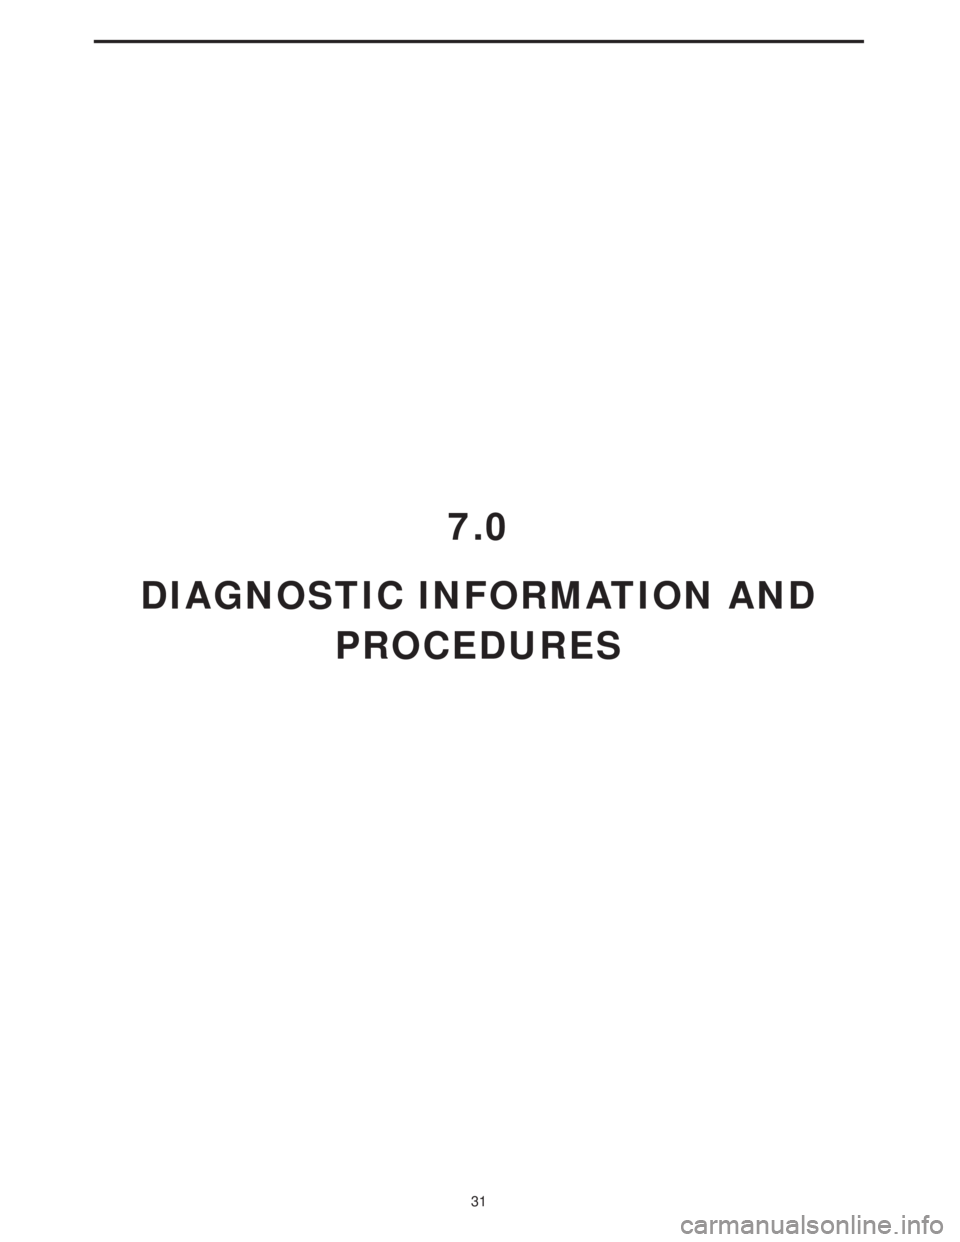 CHRYSLER VOYAGER 2001  Service Manual 7.0
DIAGNOSTIC INFORMATION AND
PROCEDURES
31 